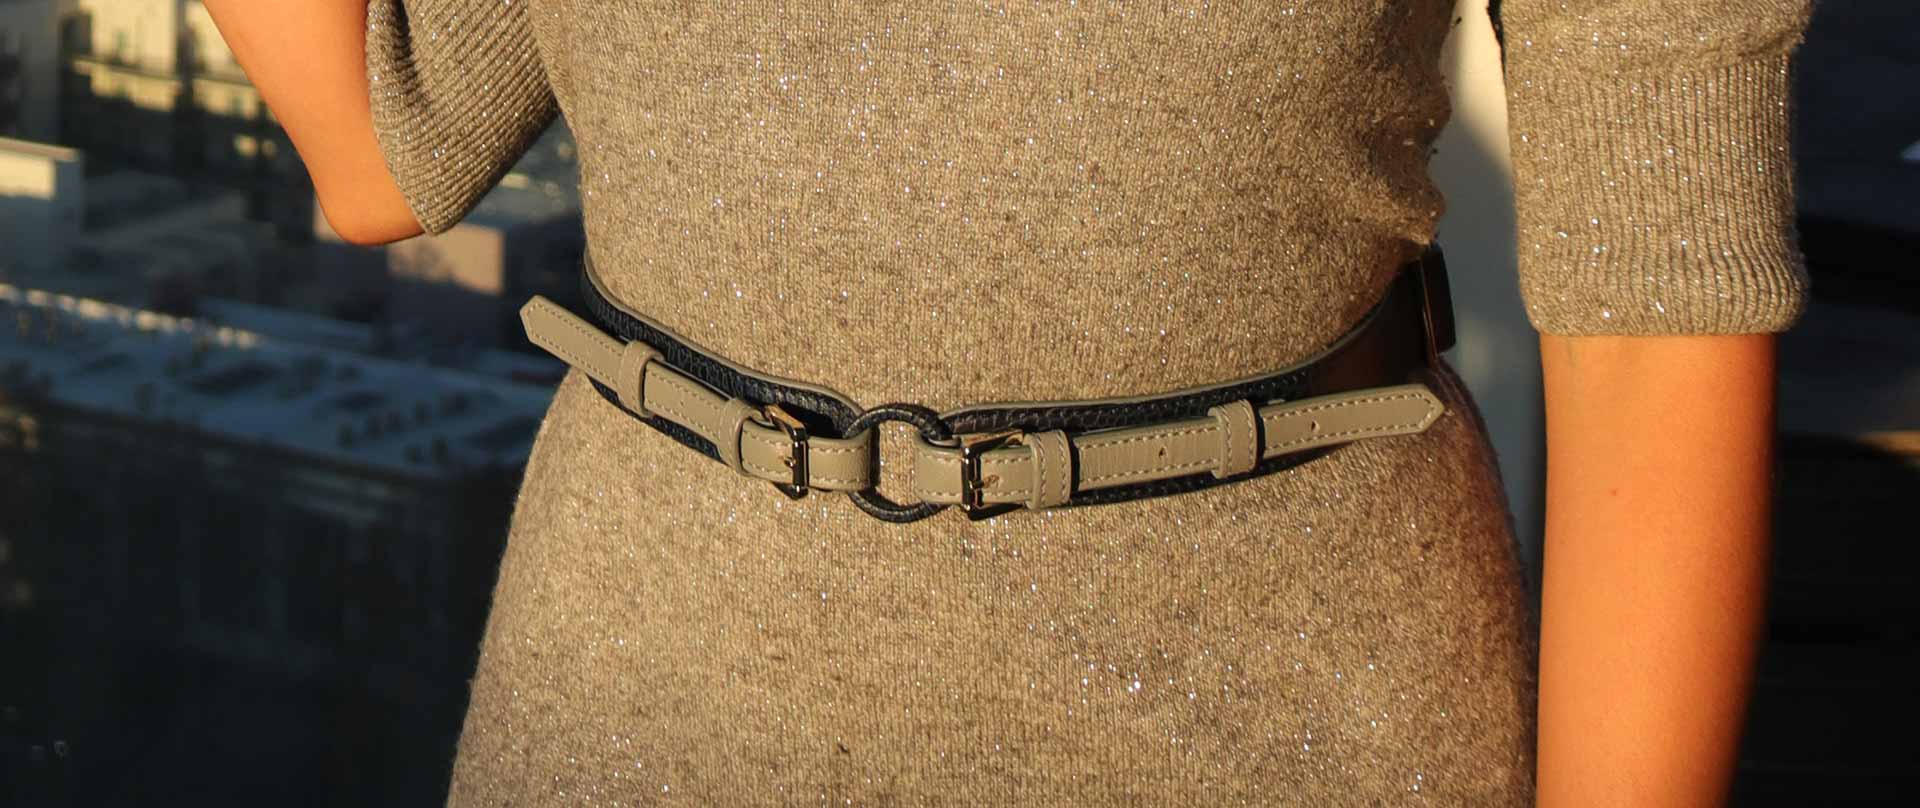 Ember slim high-waist belt in grey & blue leather